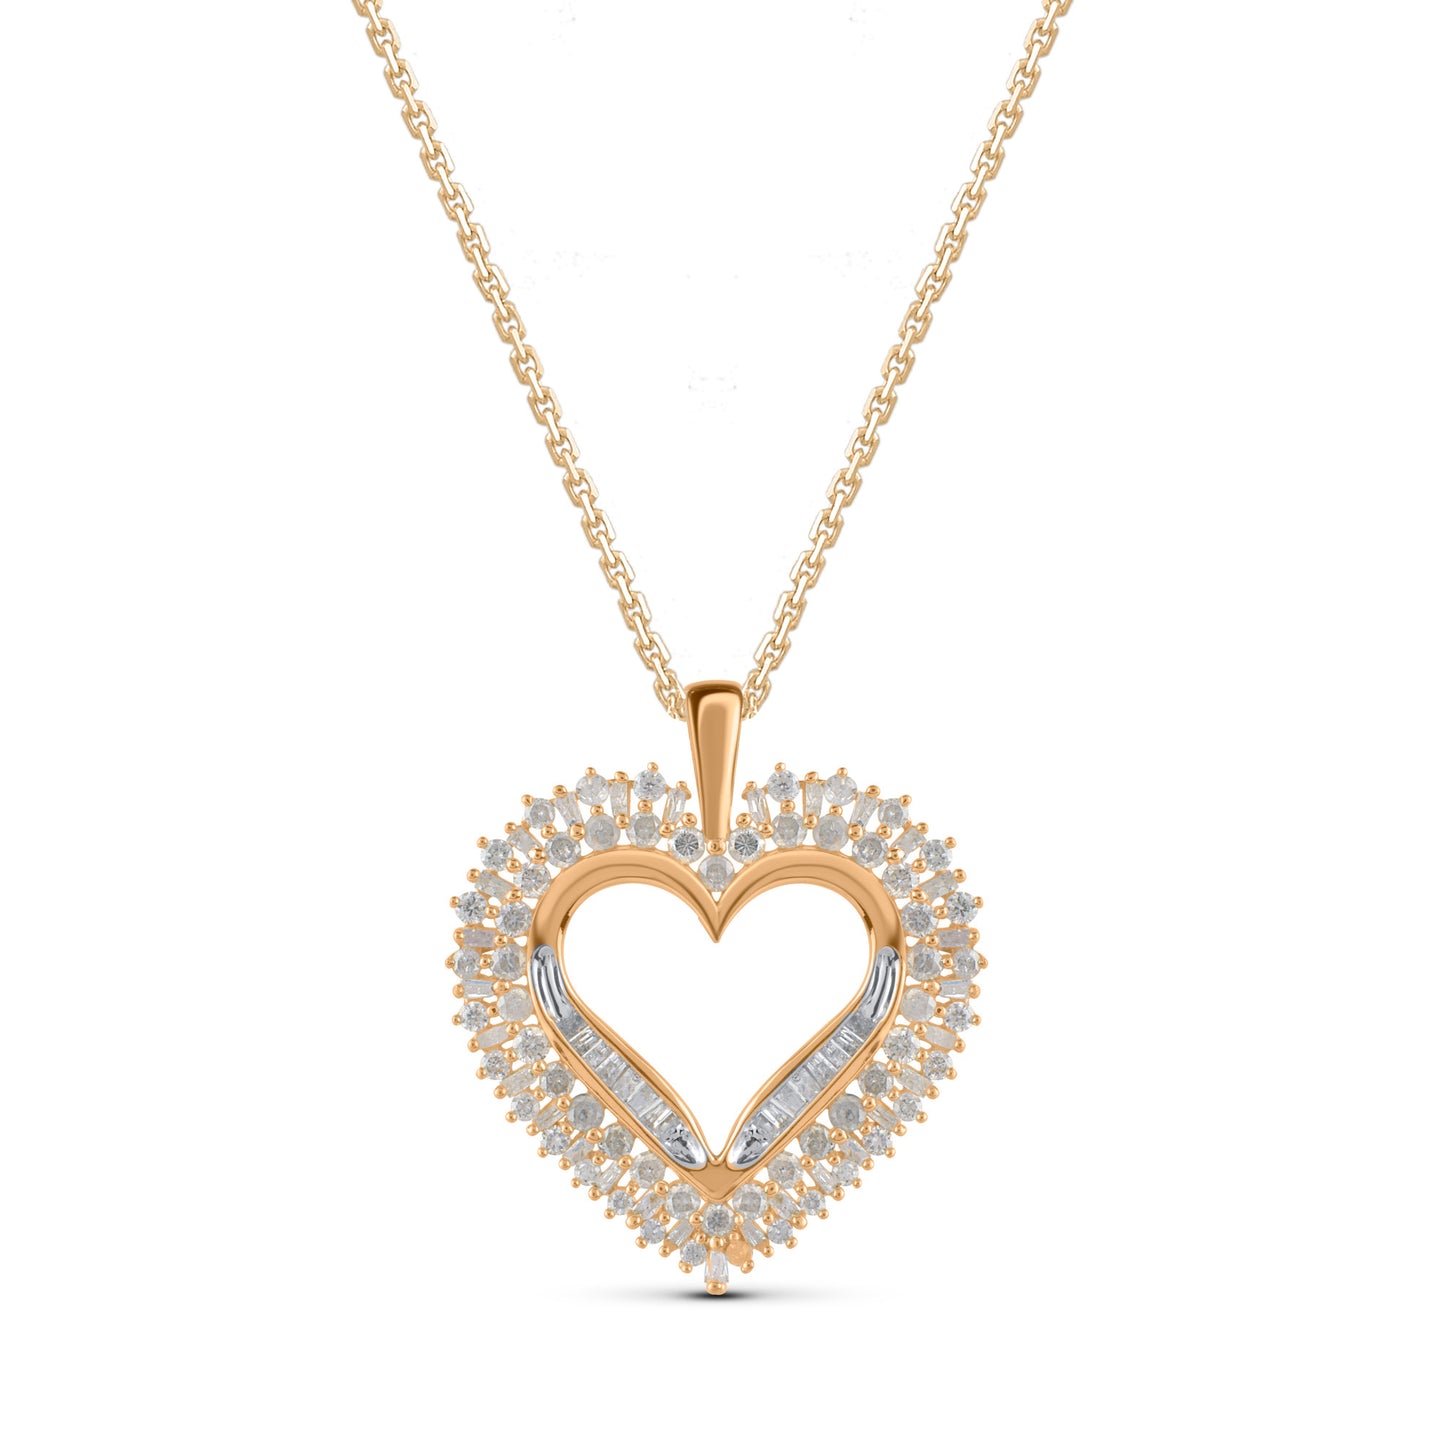 Baguette Heart Pendant Necklace in 10K Gold